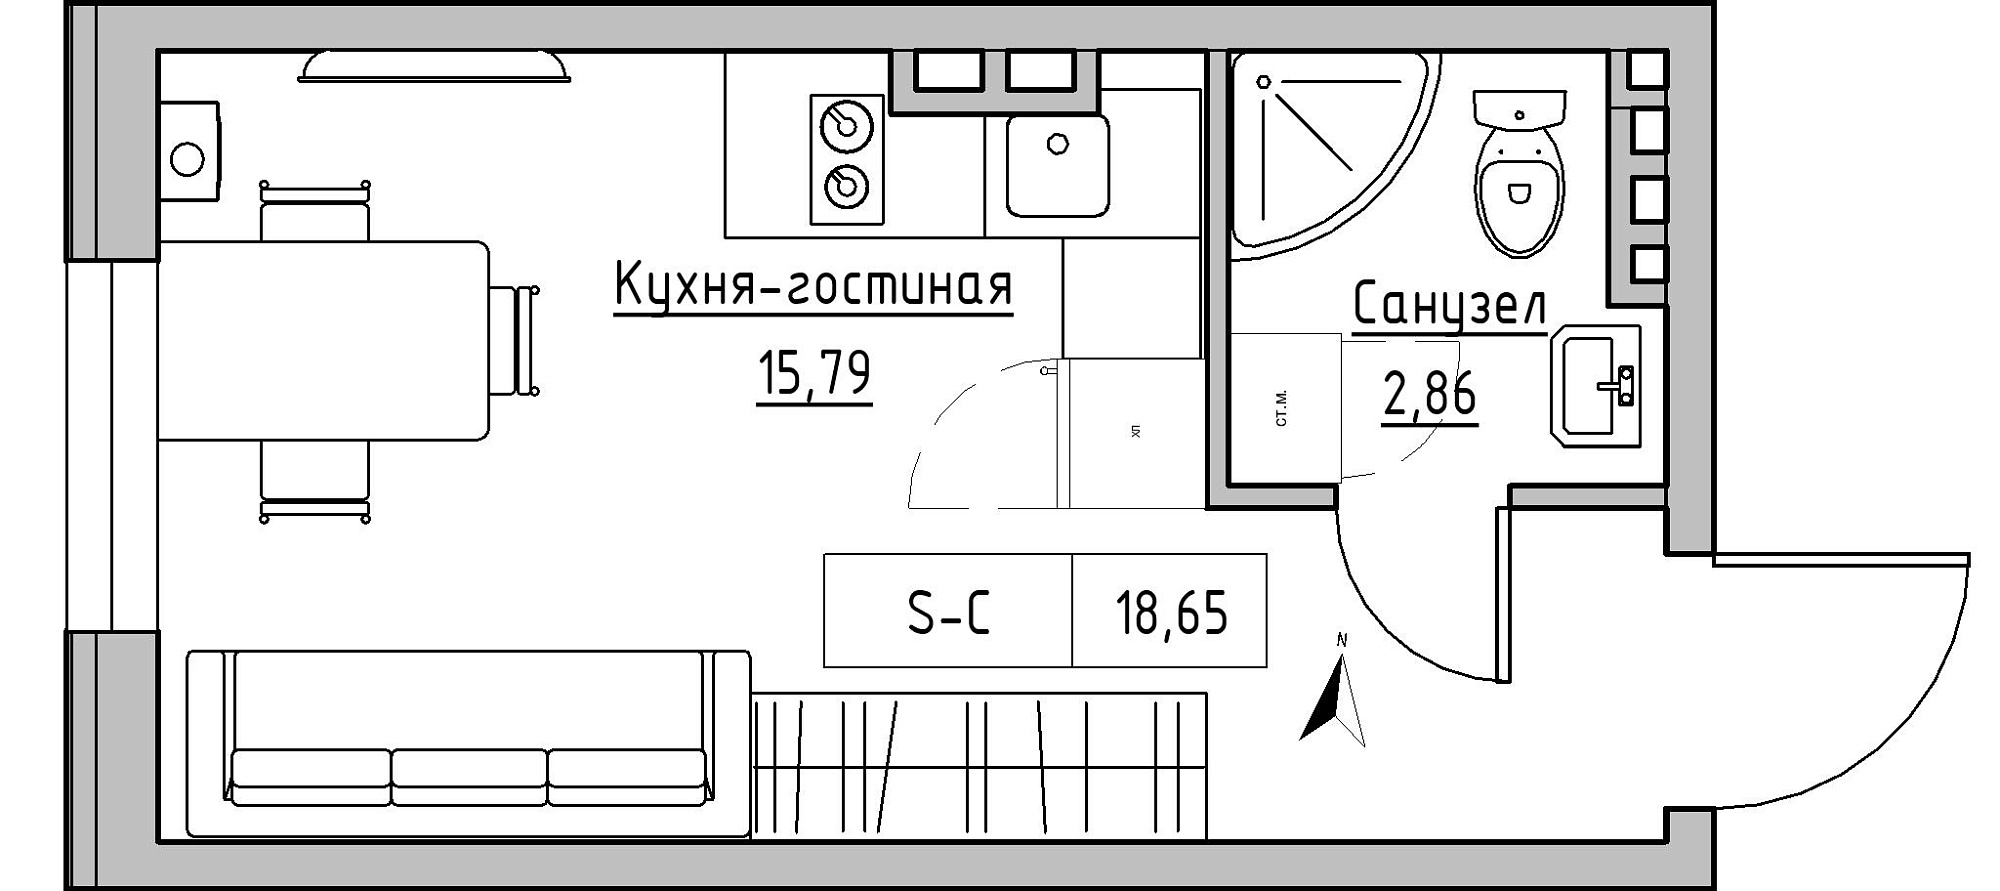 Планировка Smart-квартира площей 18.65м2, KS-024-02/0011.